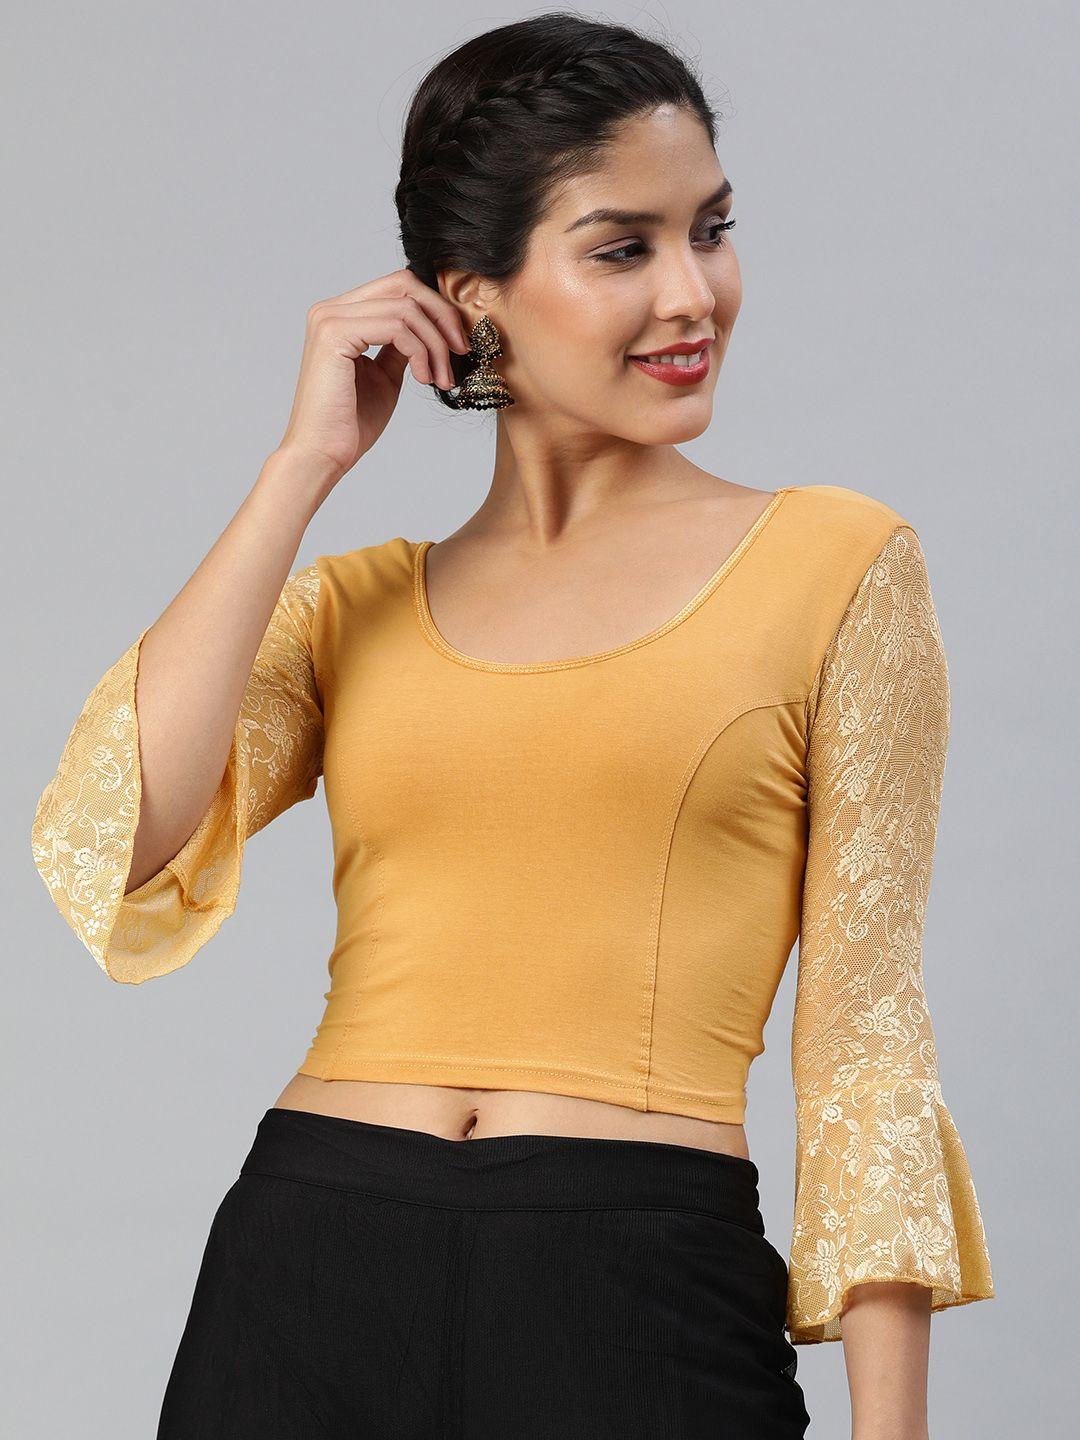 inddus beige cotton stretch saree blouse with lace detail